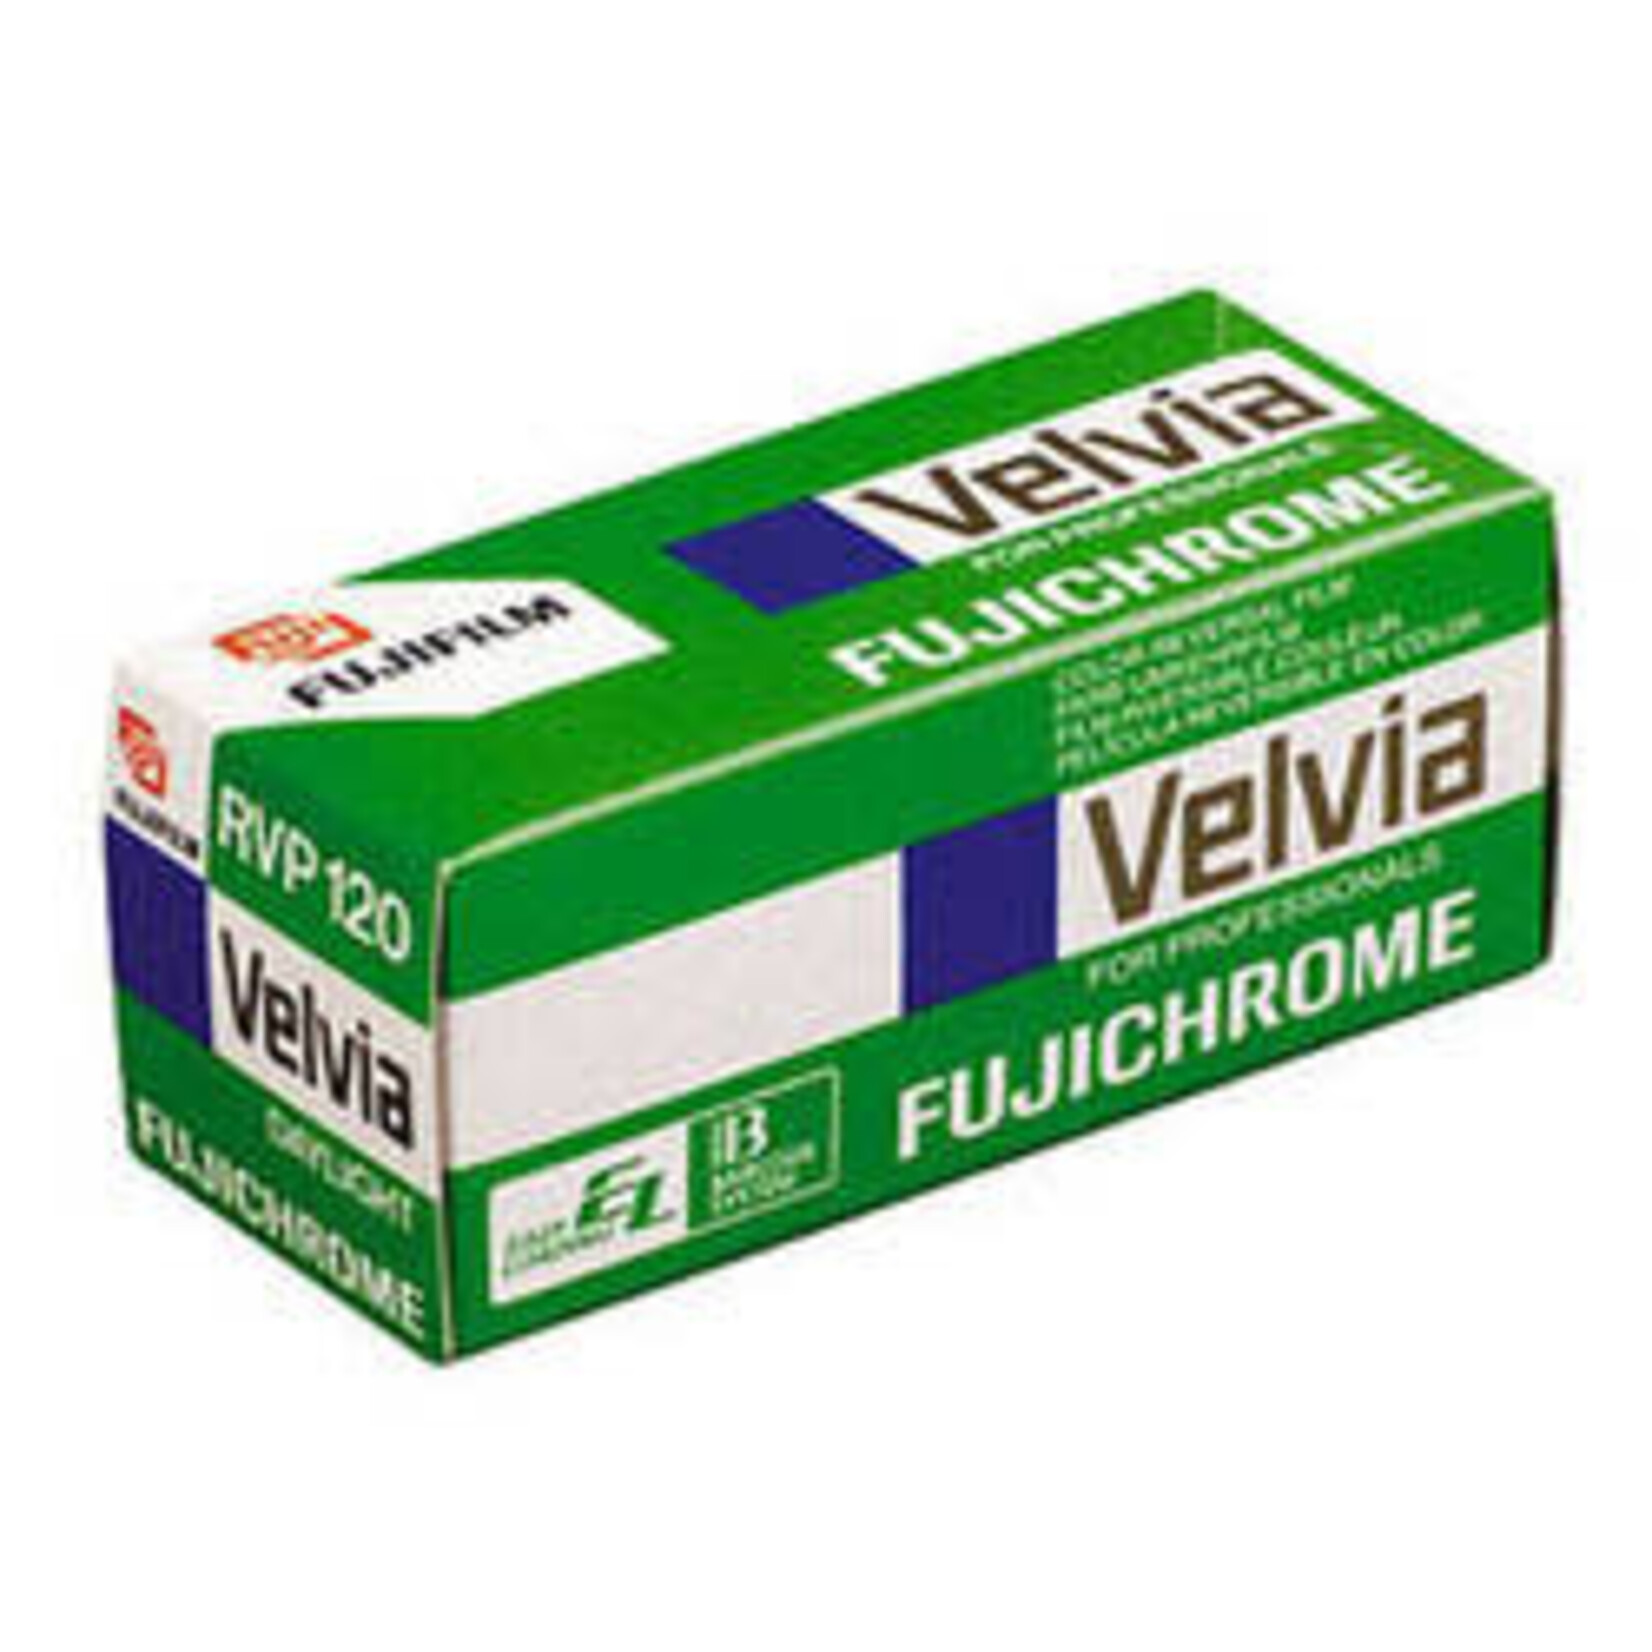 Fujifilm Fujichrome Velvia Profl RVP 120/50 Daylight Color Reversal